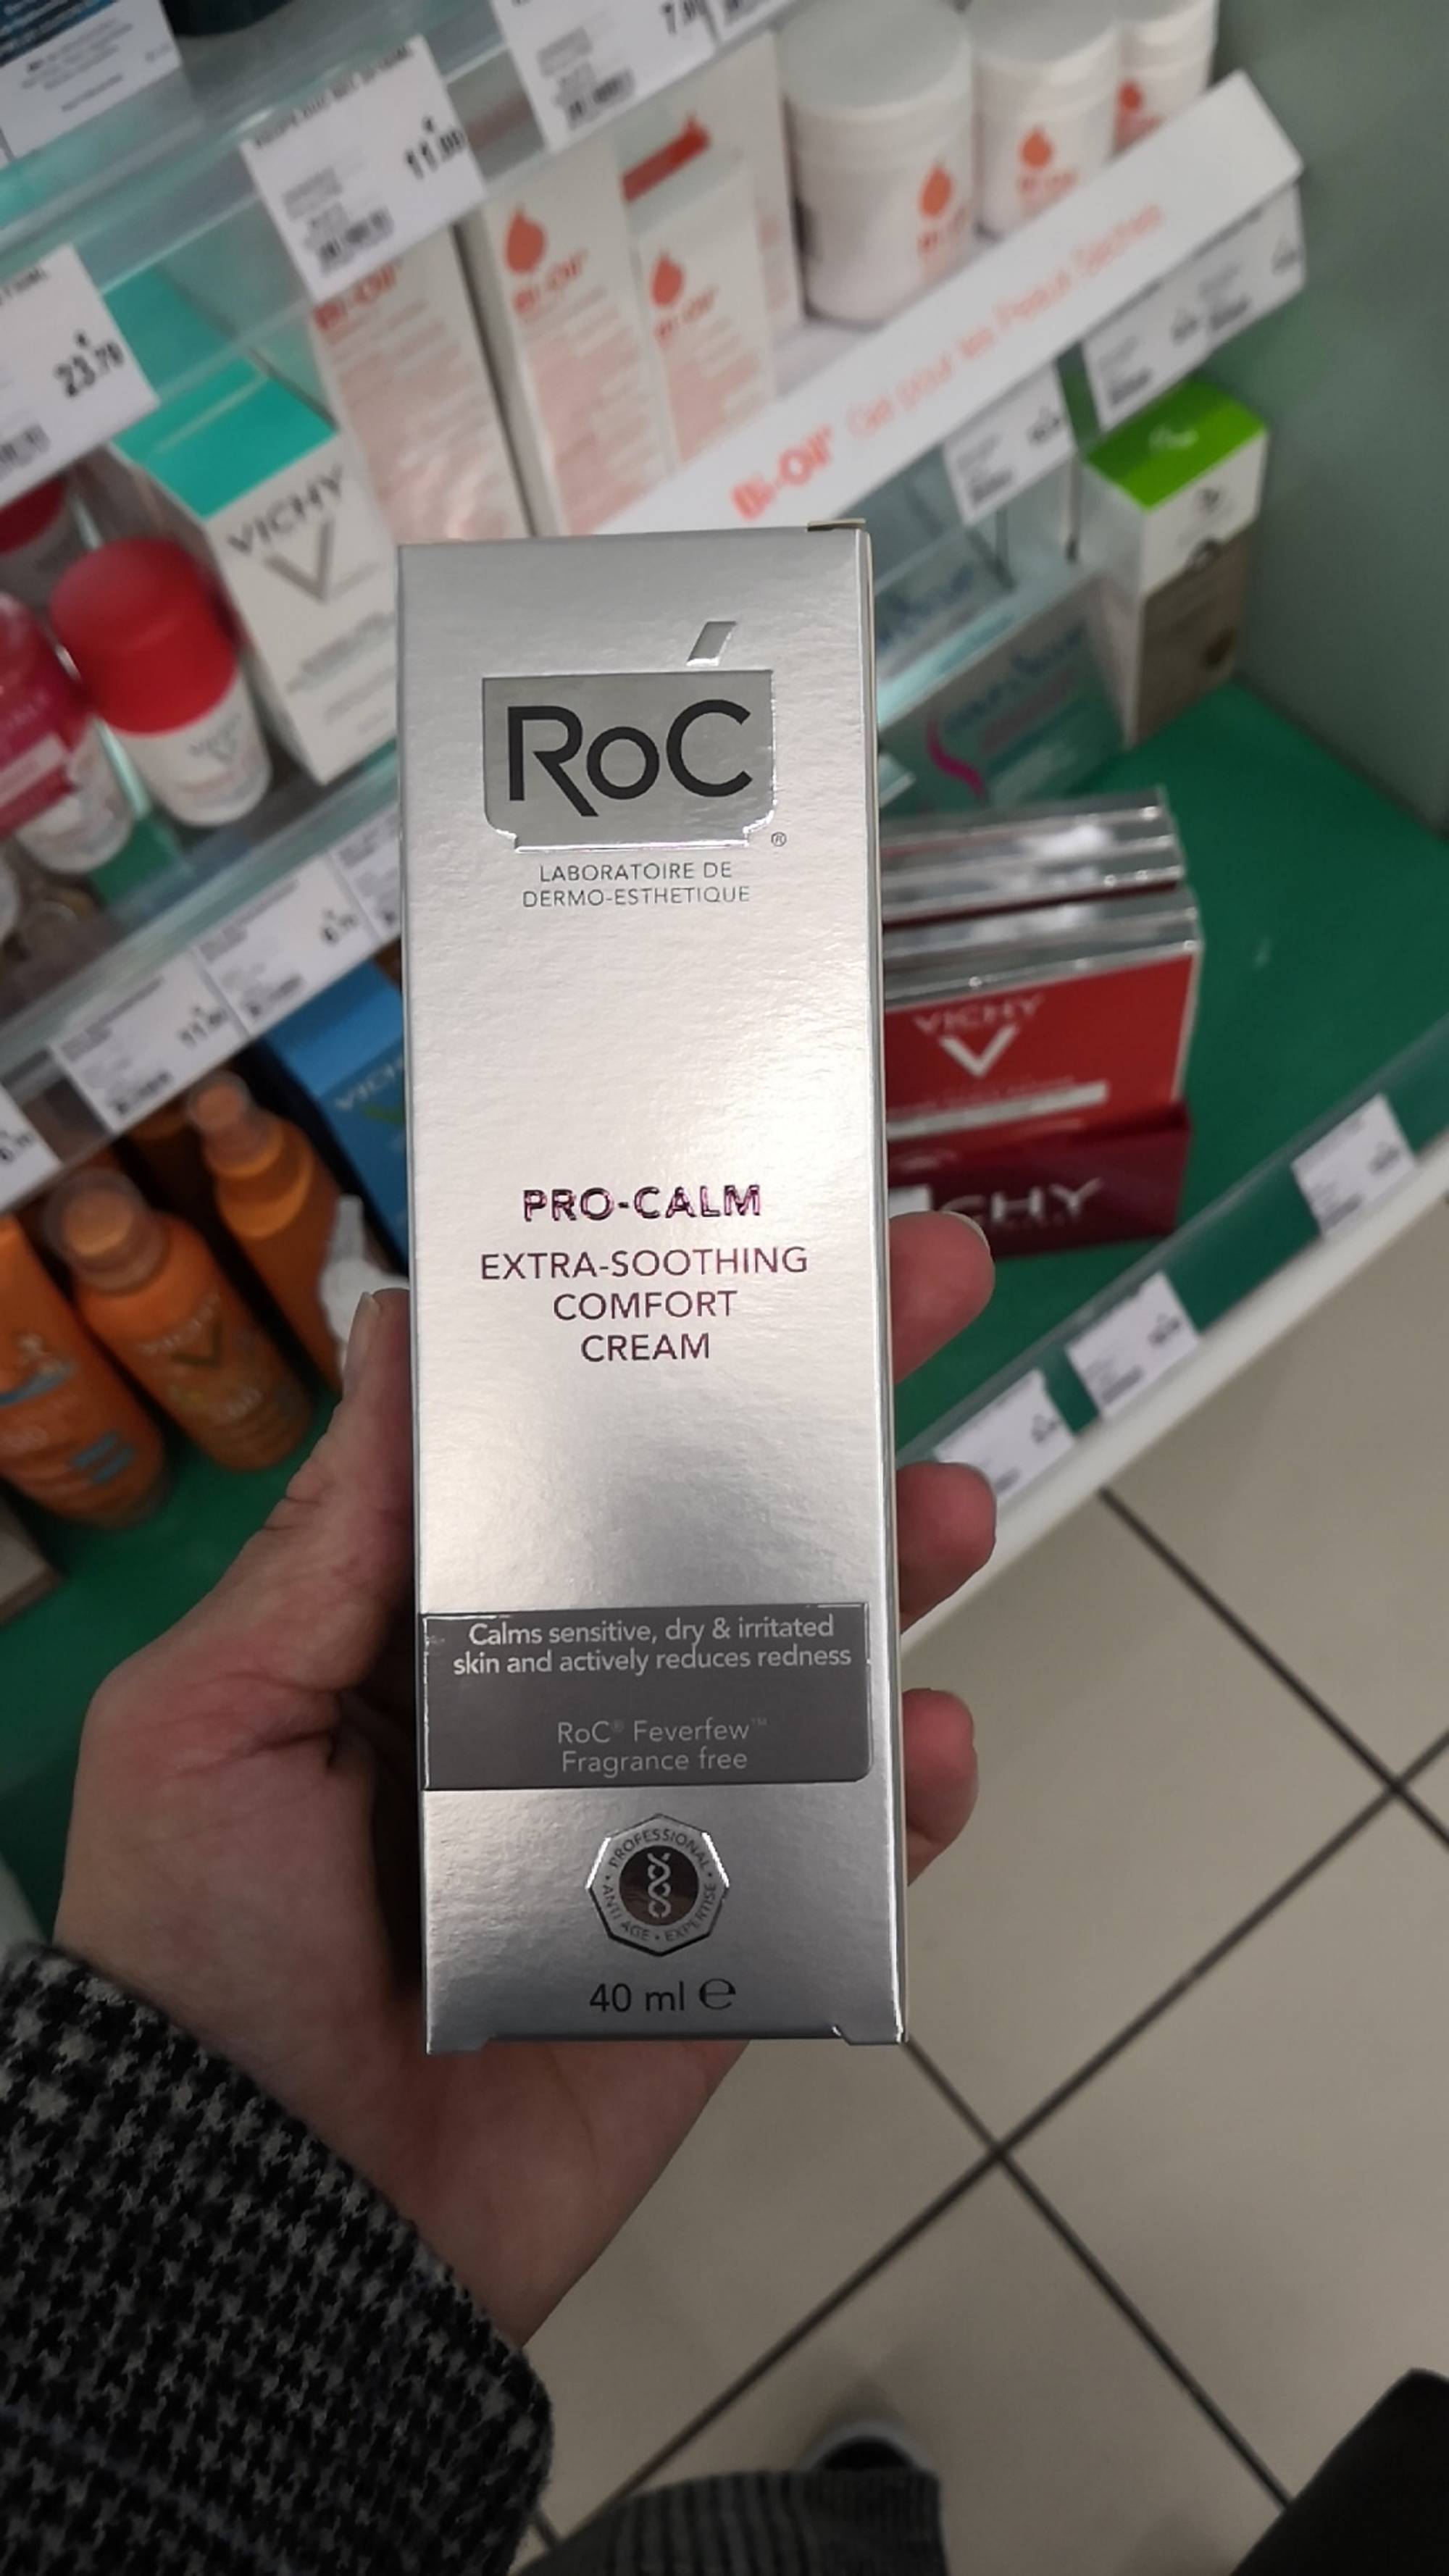 ROC - Pro-calm - Extra-soothing comfort cream